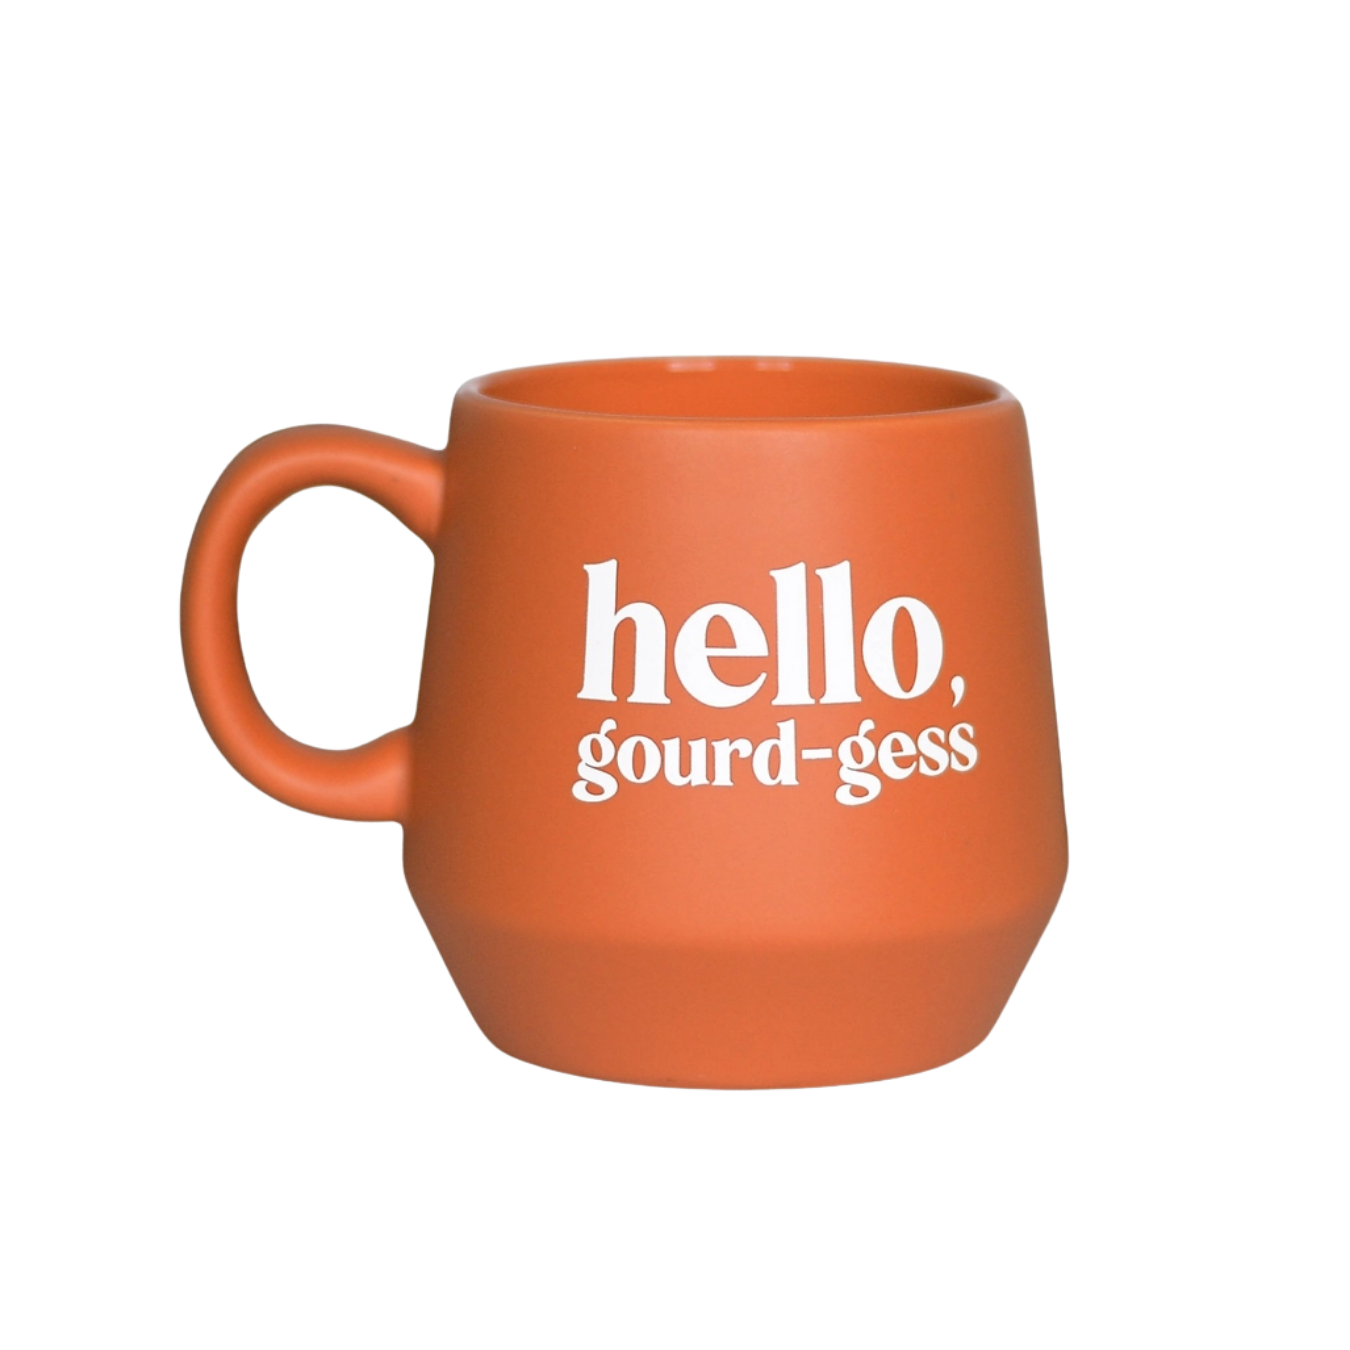 Gourd-gess Mug - HoneyBug 